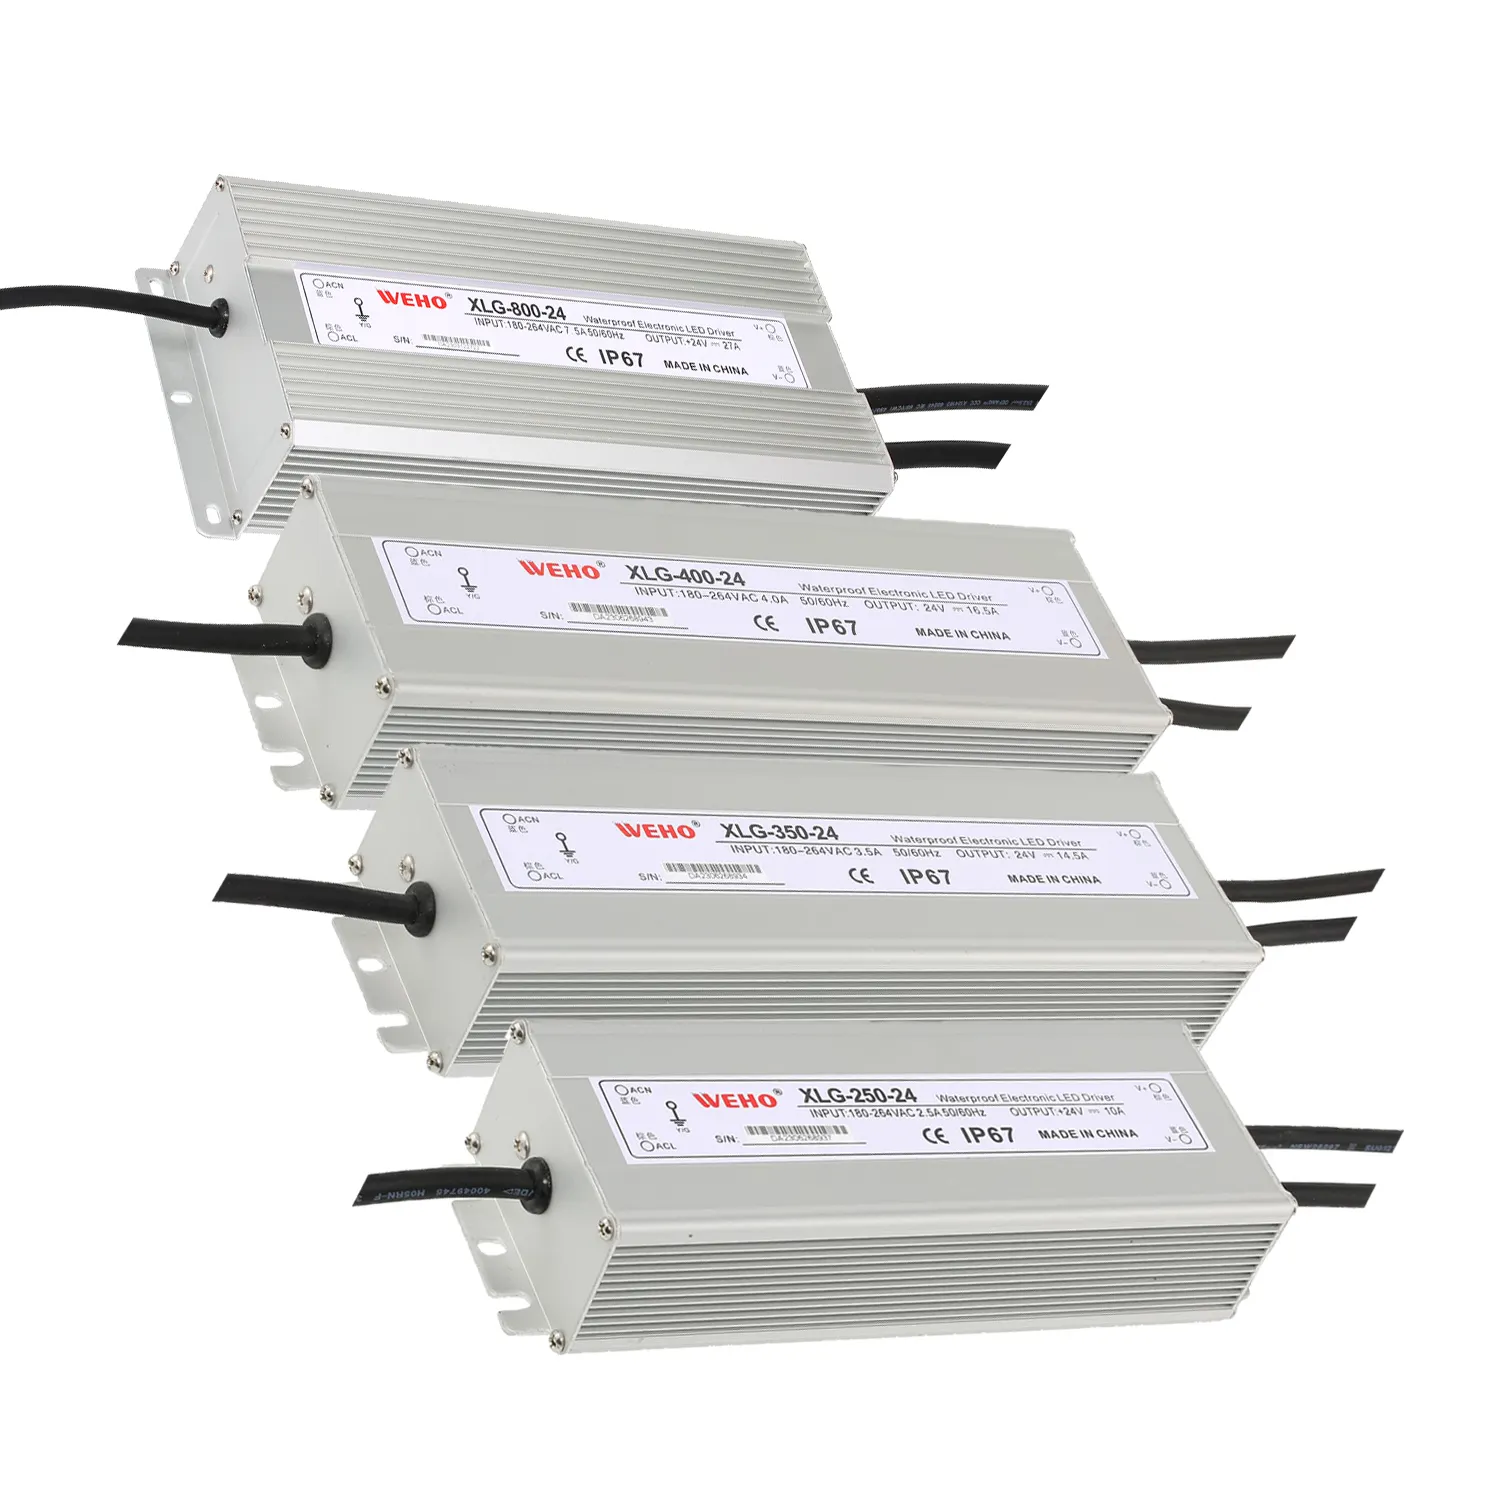 Impermeabile IP7 LED Driver 25W 100W 650W AC 110V 220V DC 48V 13.5A alimentazione di commutazione per illuminazione a LED per esterni